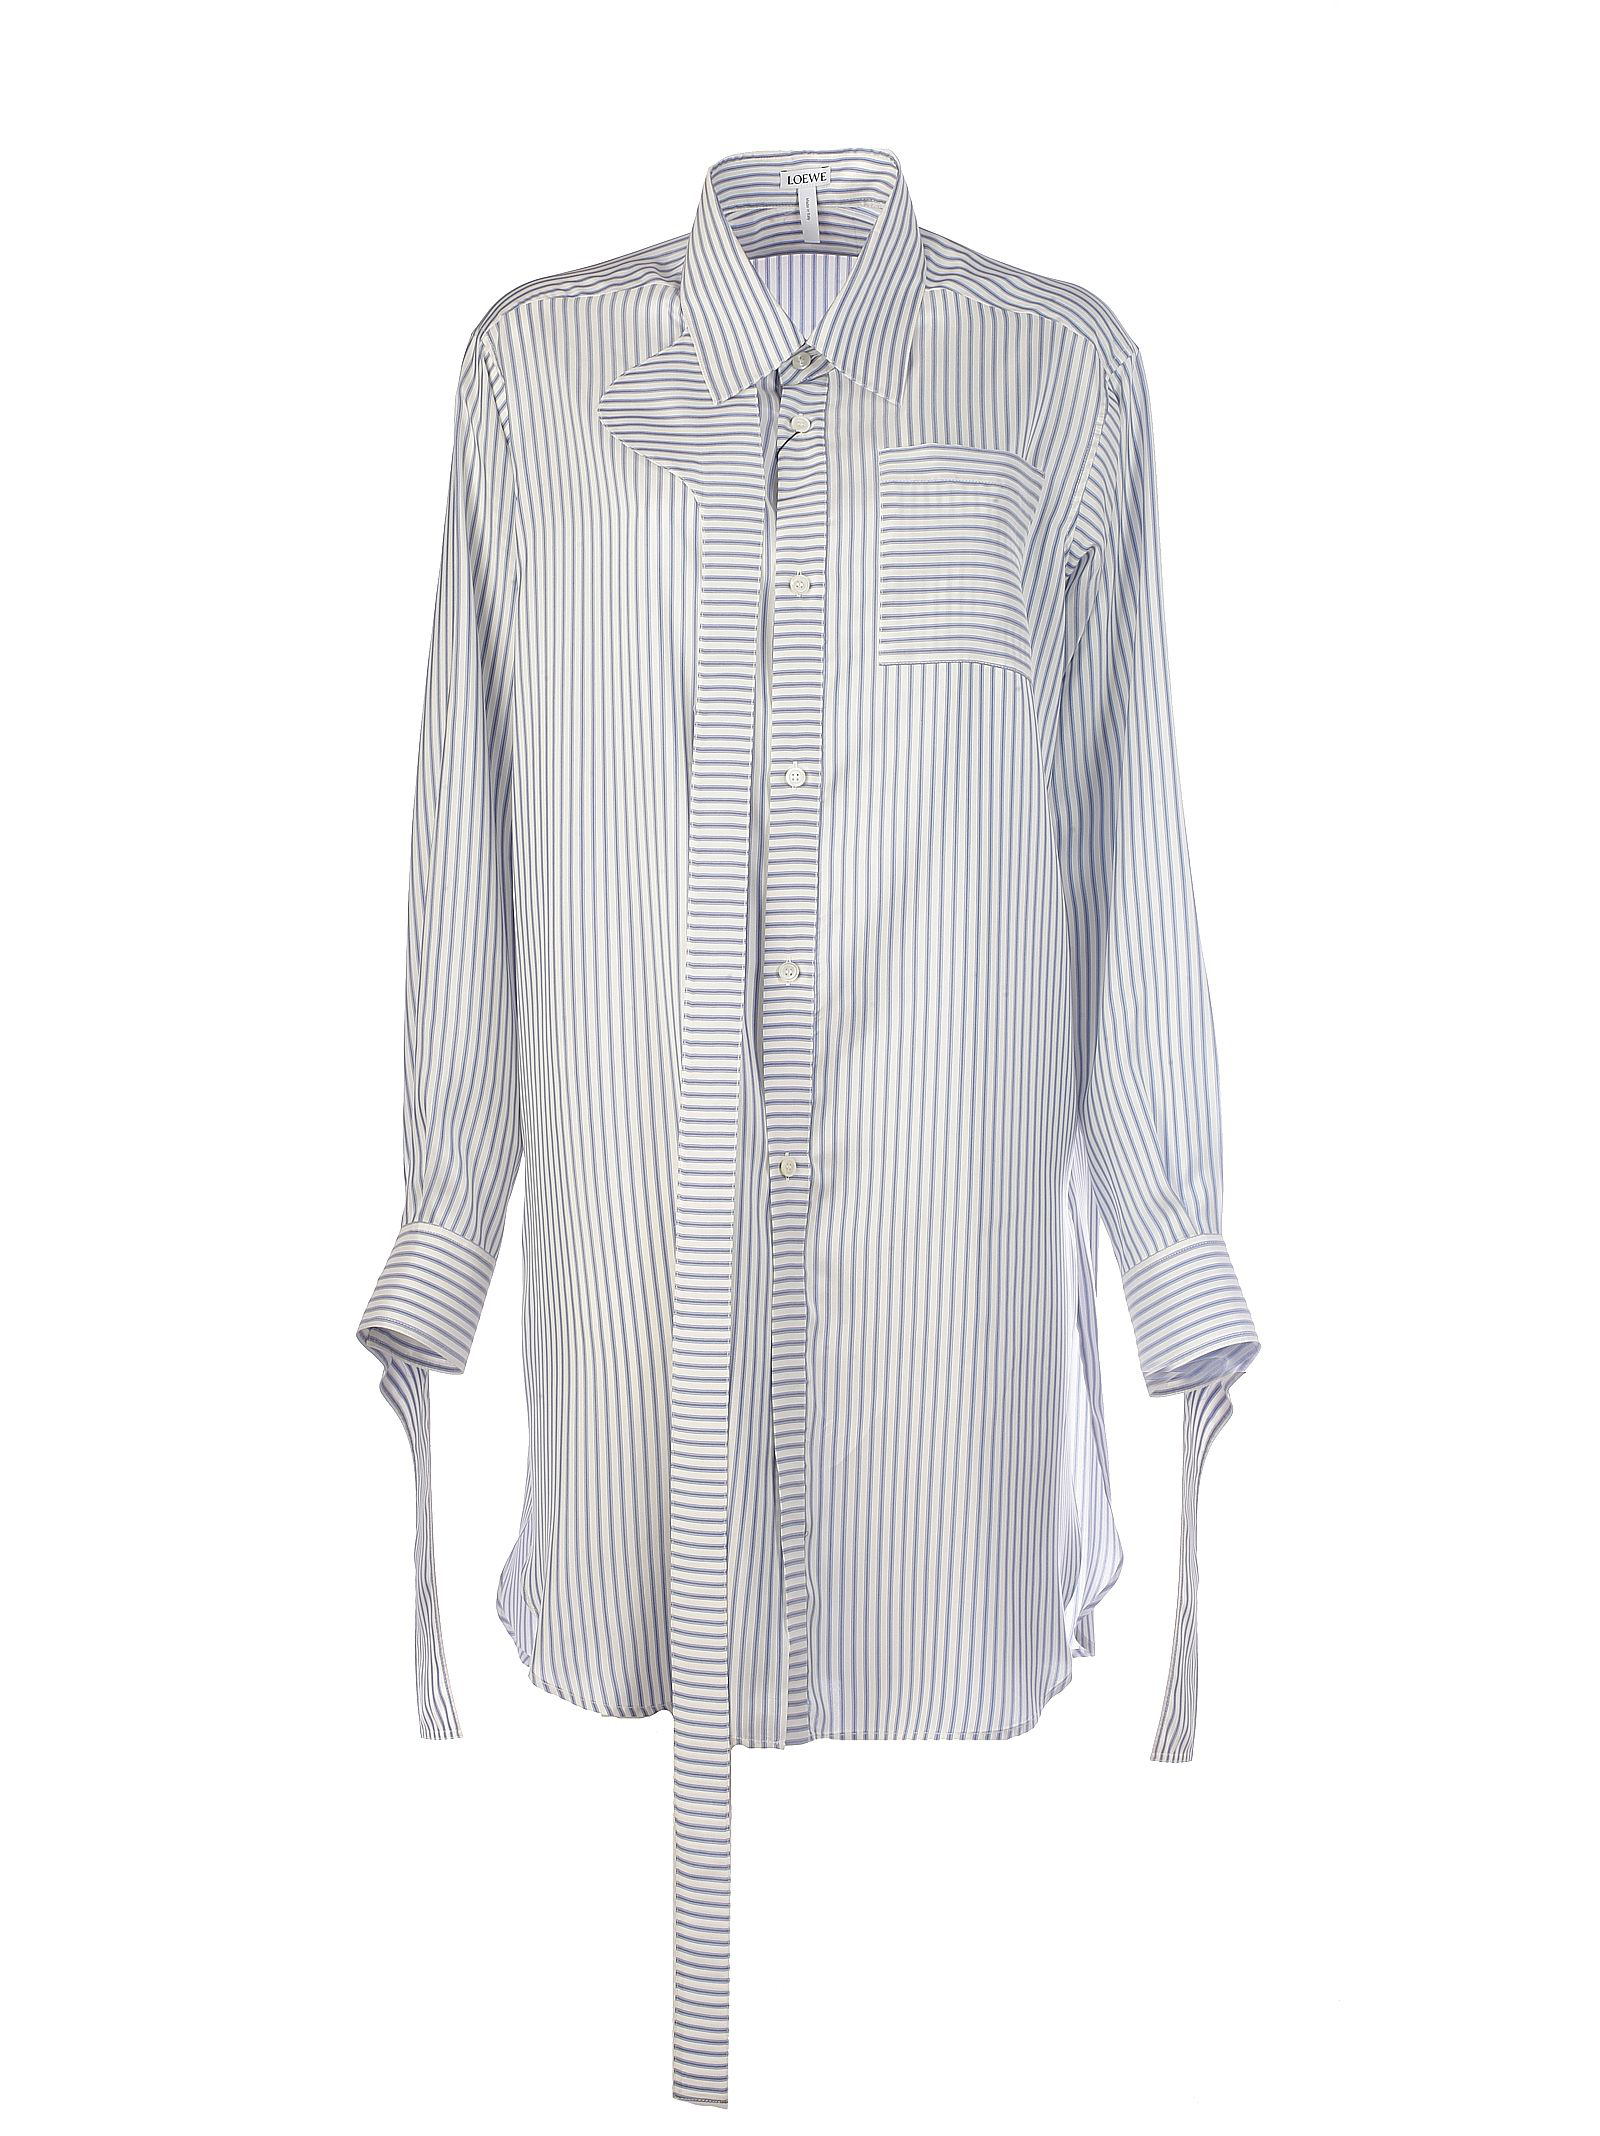 Loewe Striped Silk Shirt In White/blue | ModeSens